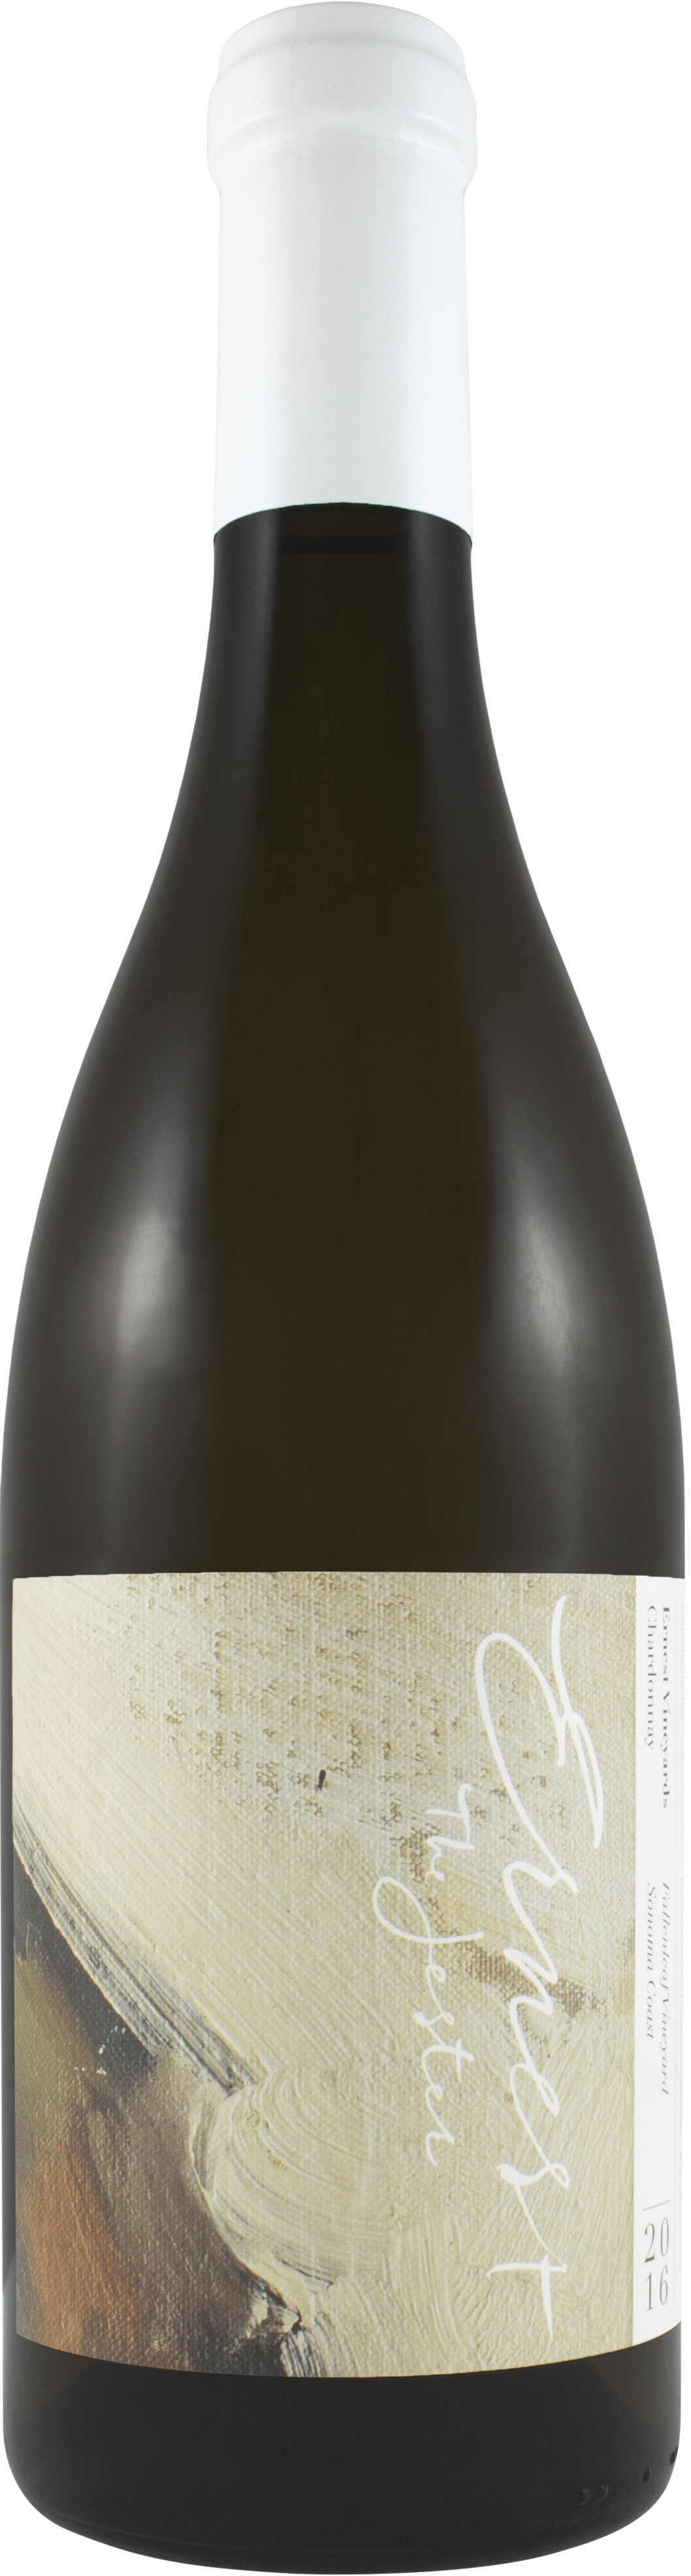 2016 Ernest Vineyard The Jester Chardonnay